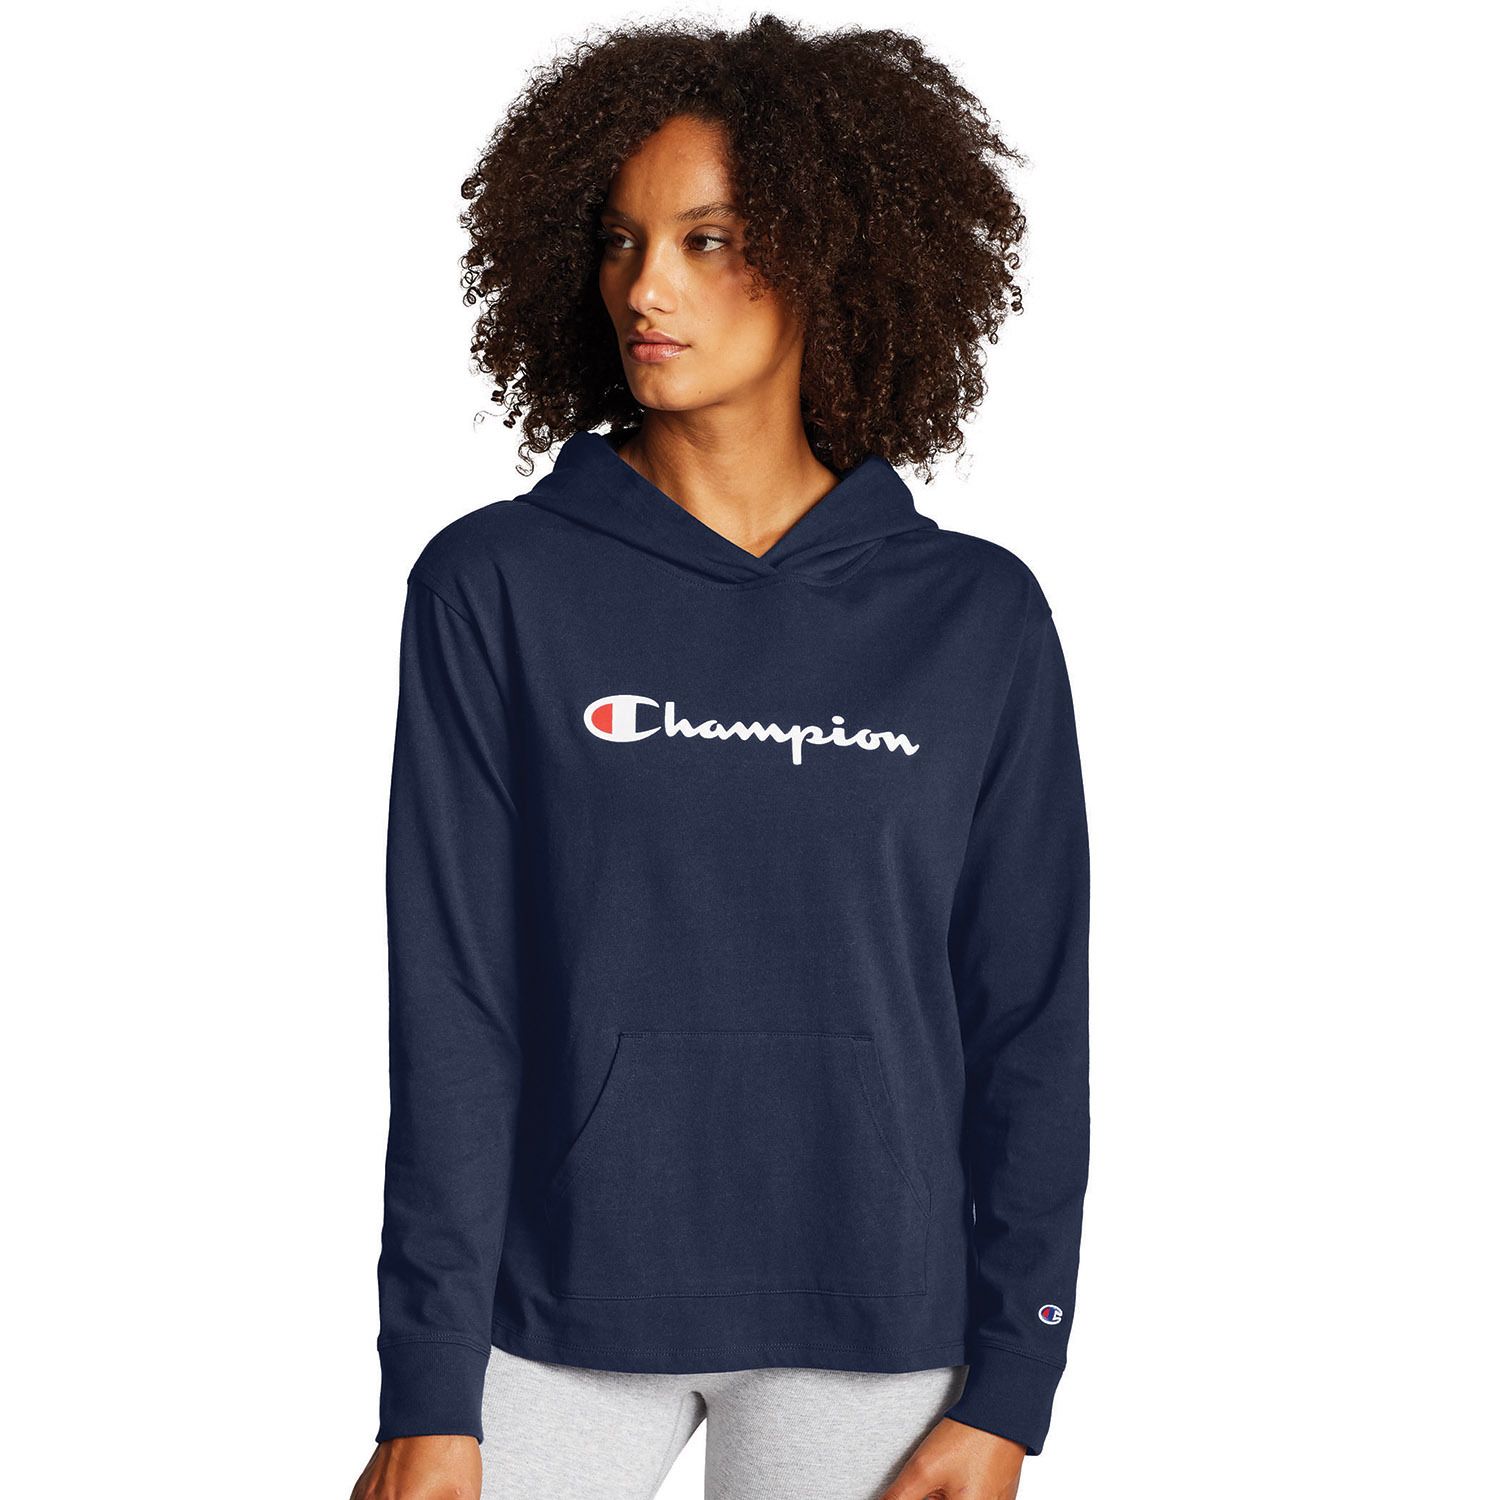 champion hoodie womens kohls